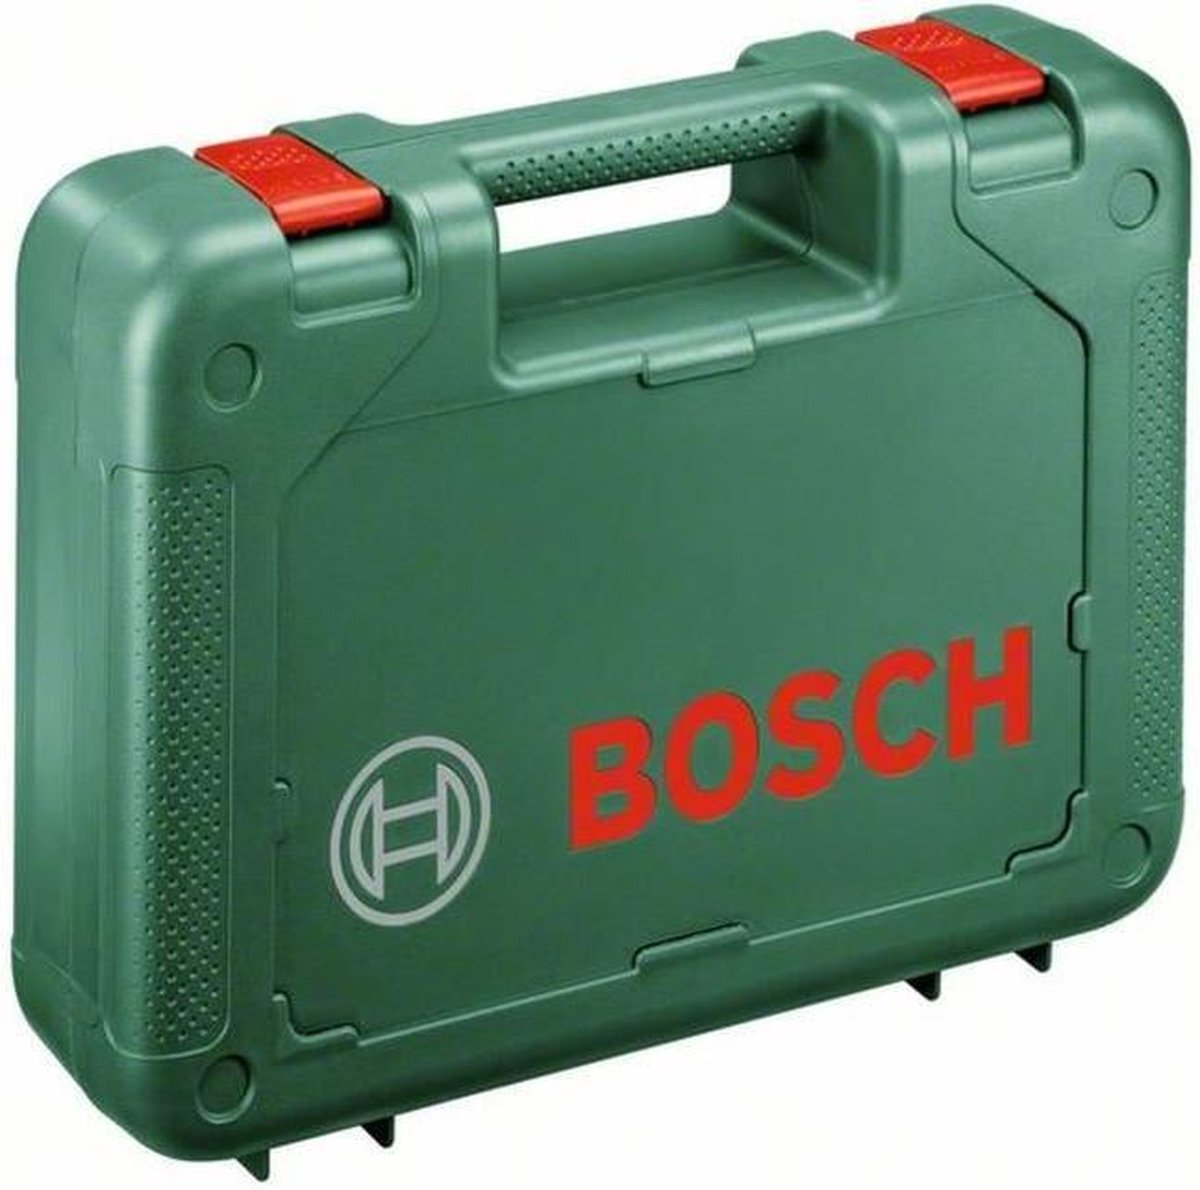 Bosch PST 800 PEL Decoupeerzaag - 530 Watt - Met kunststof koffer en 1... |  bol.com